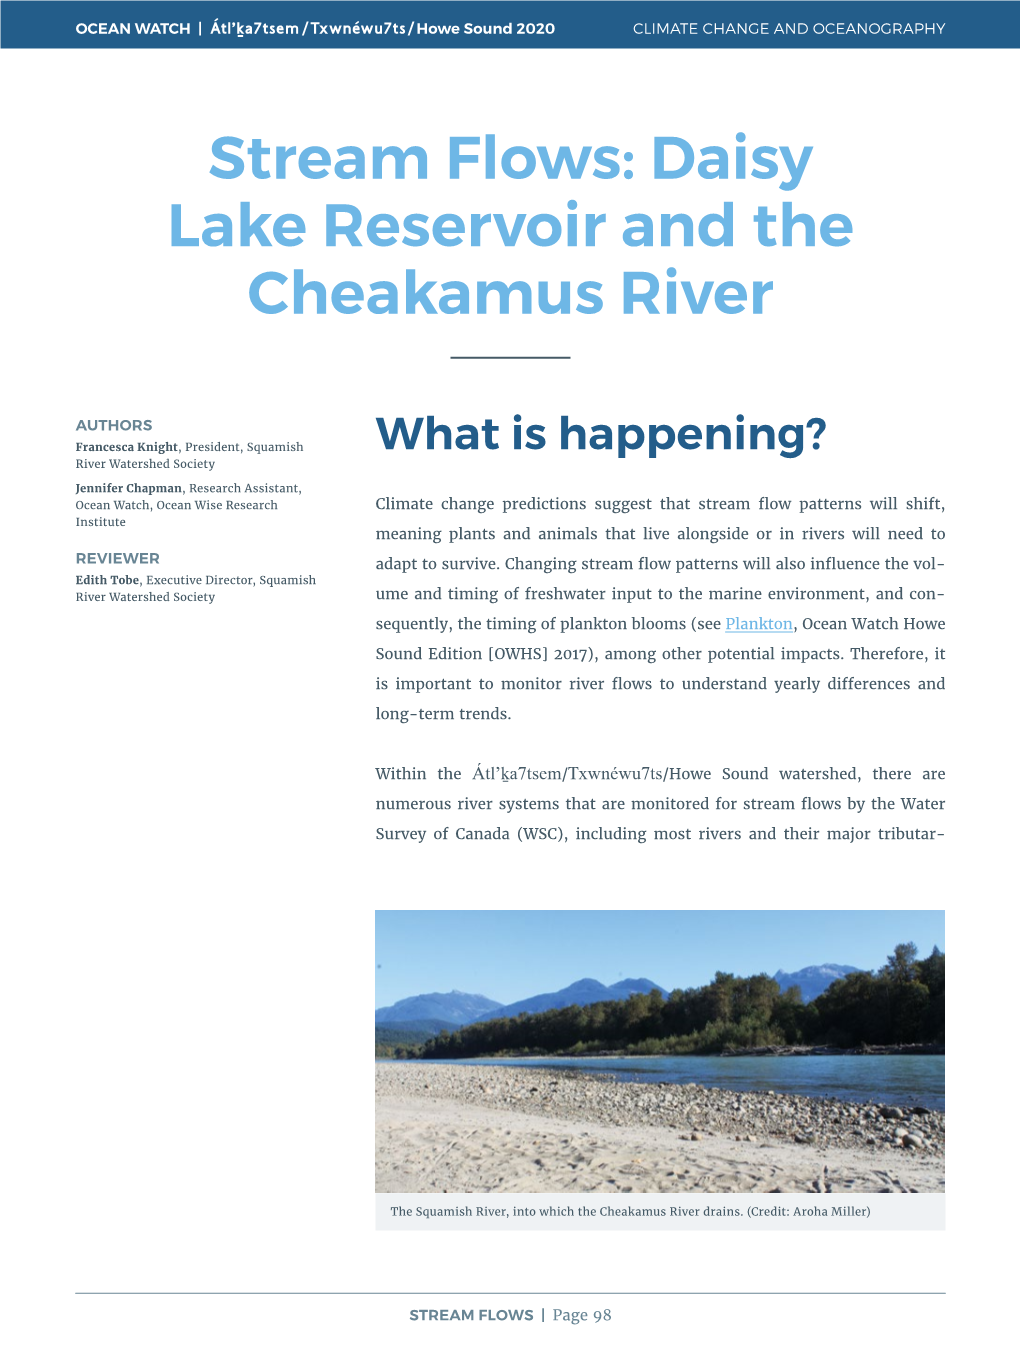 Stream Flows: Daisy Lake Reservoir and the Cheakamus River